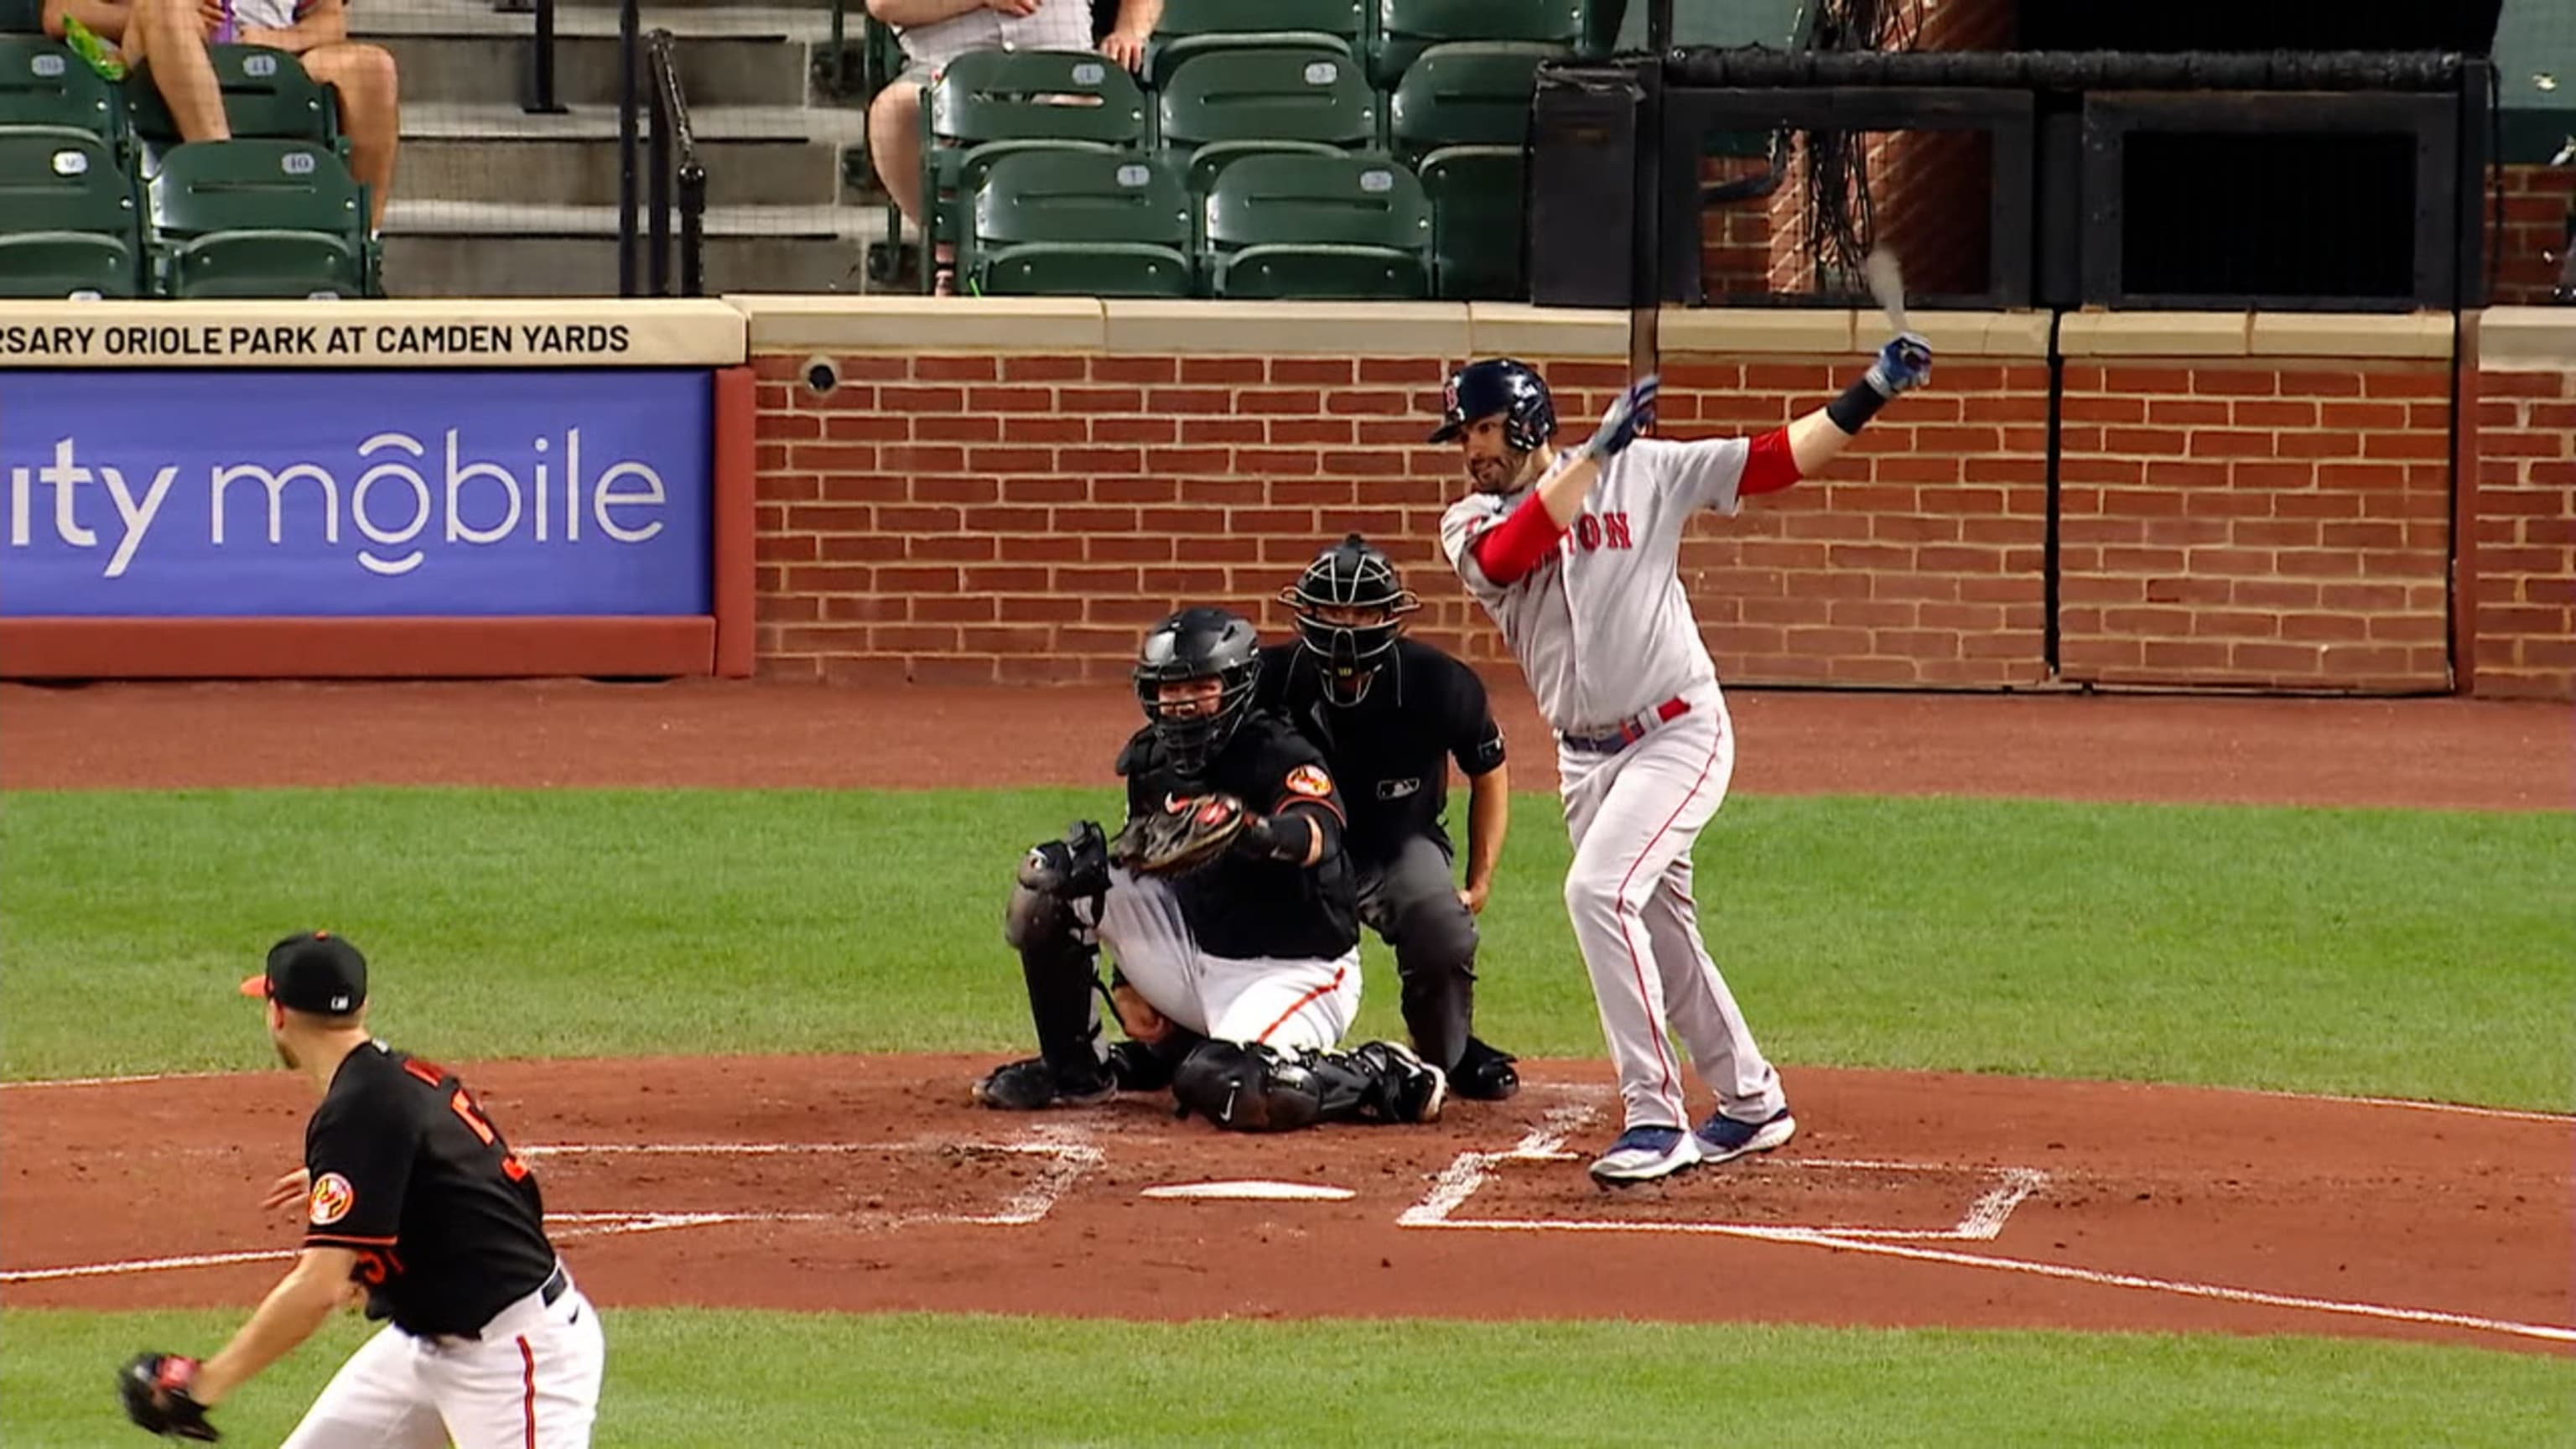 J.D. Martinez - MLB Designated hitter - News, Stats, Bio and more